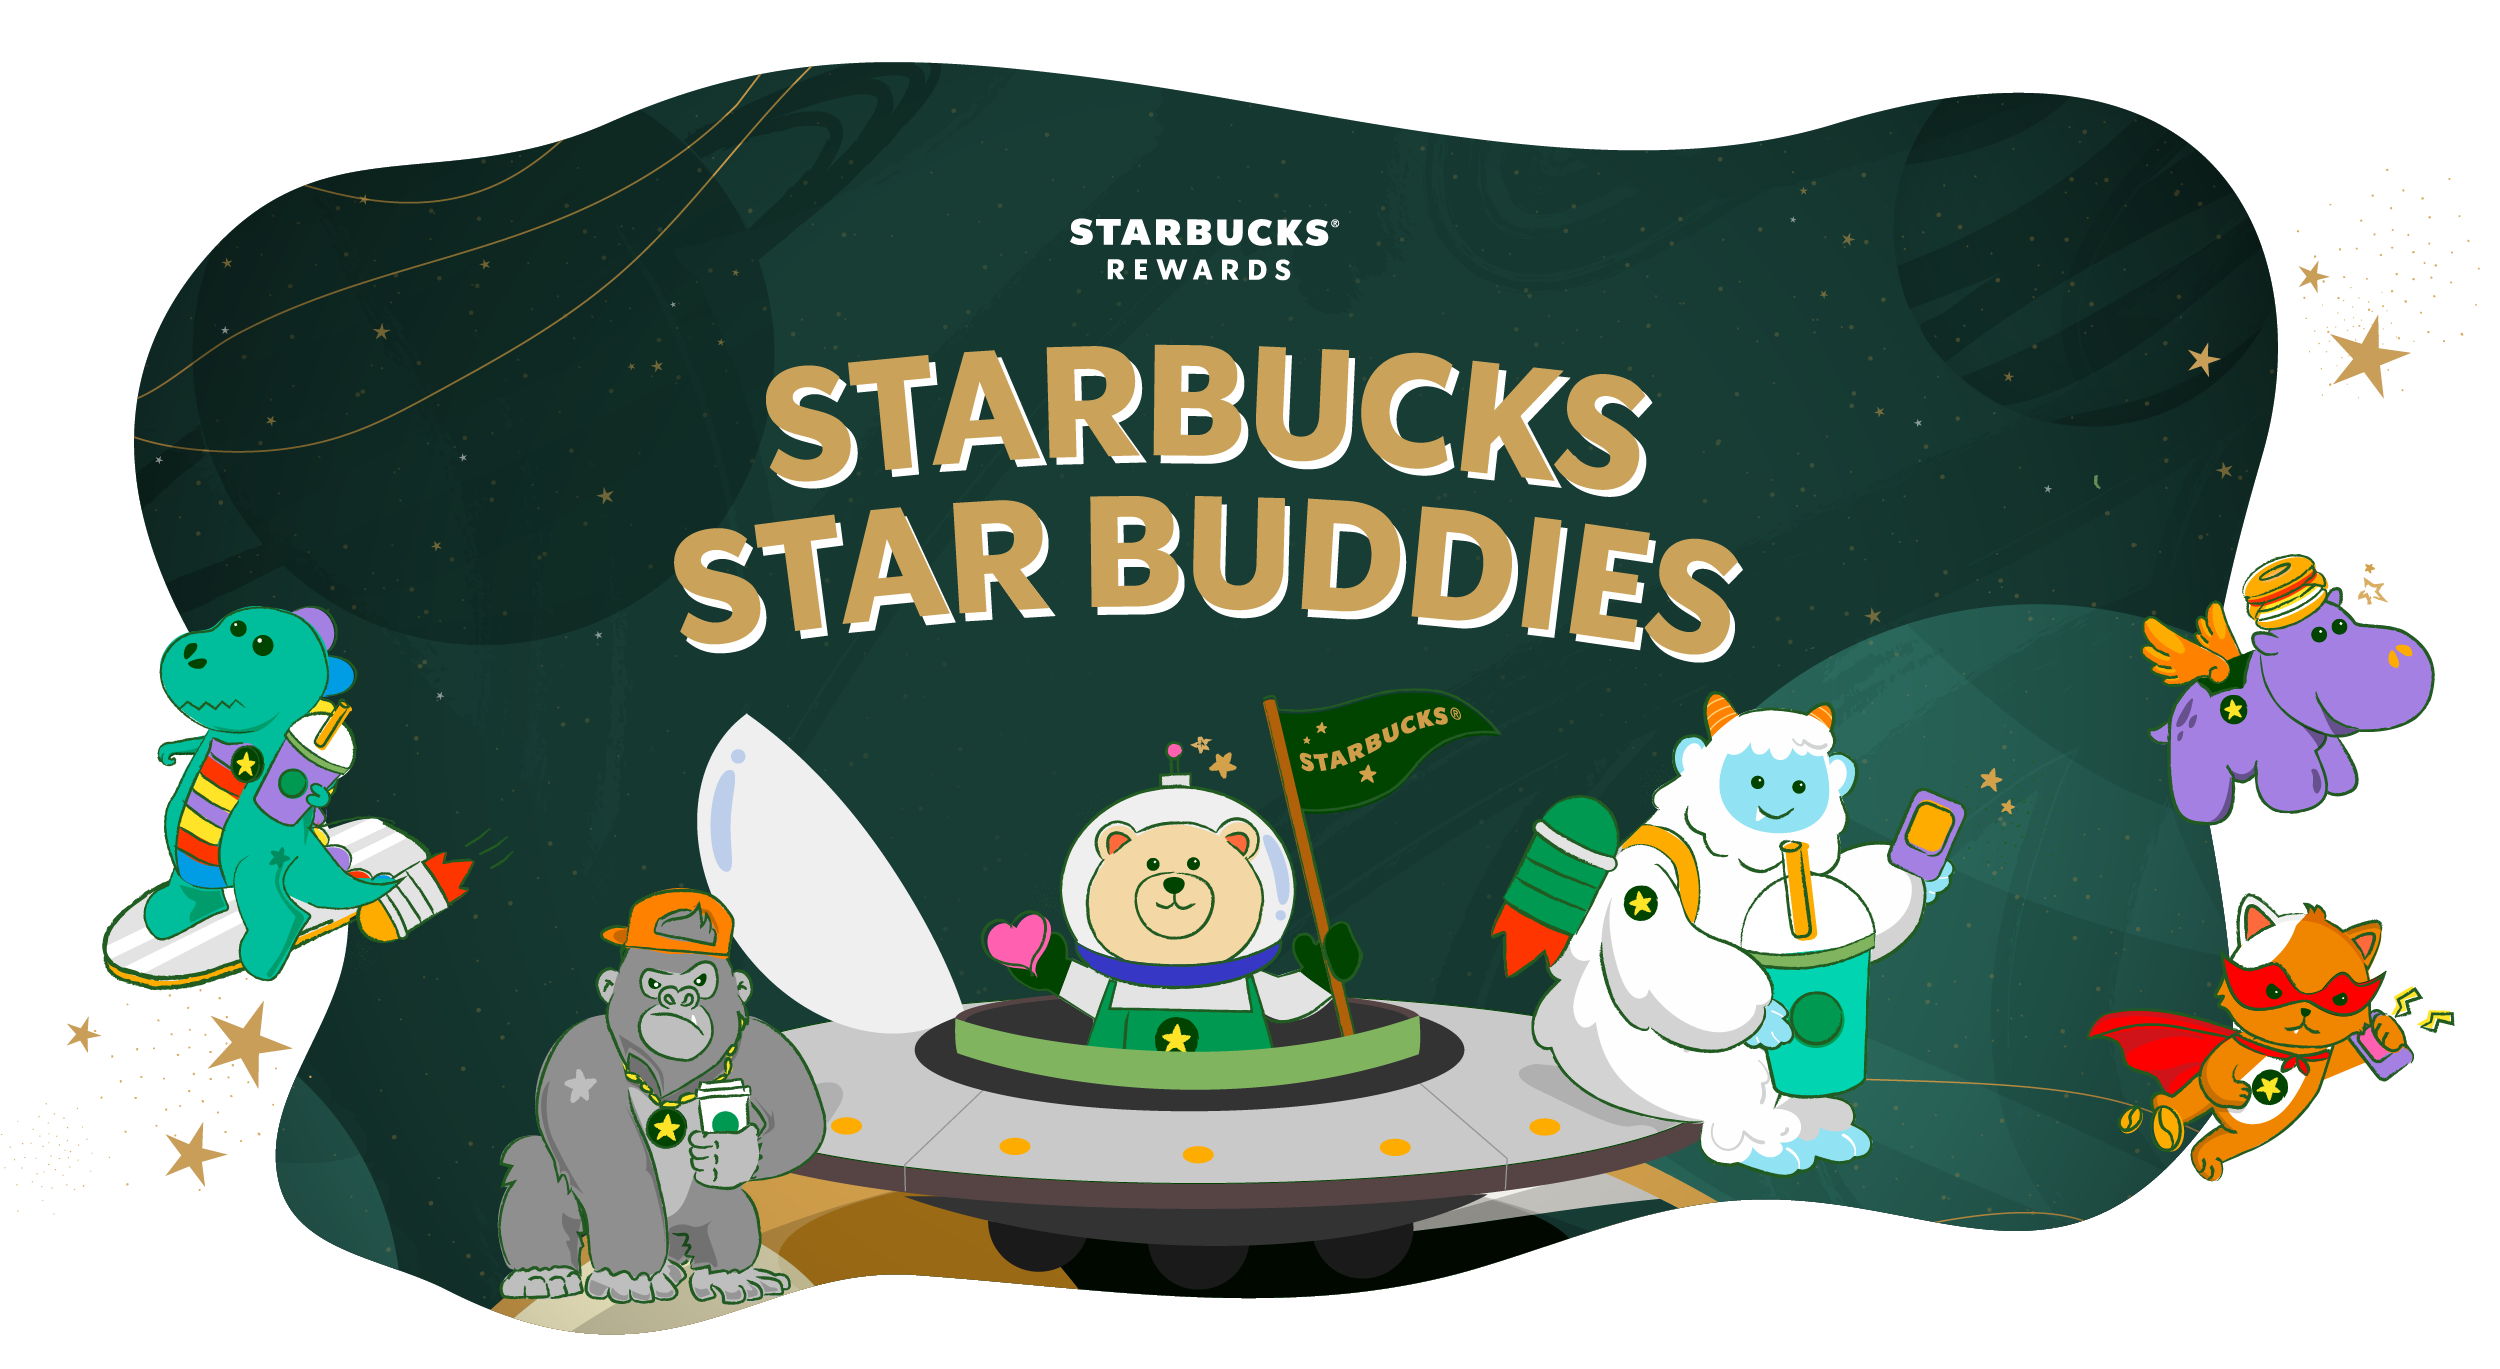 Starbucks Rewards Star Buddies